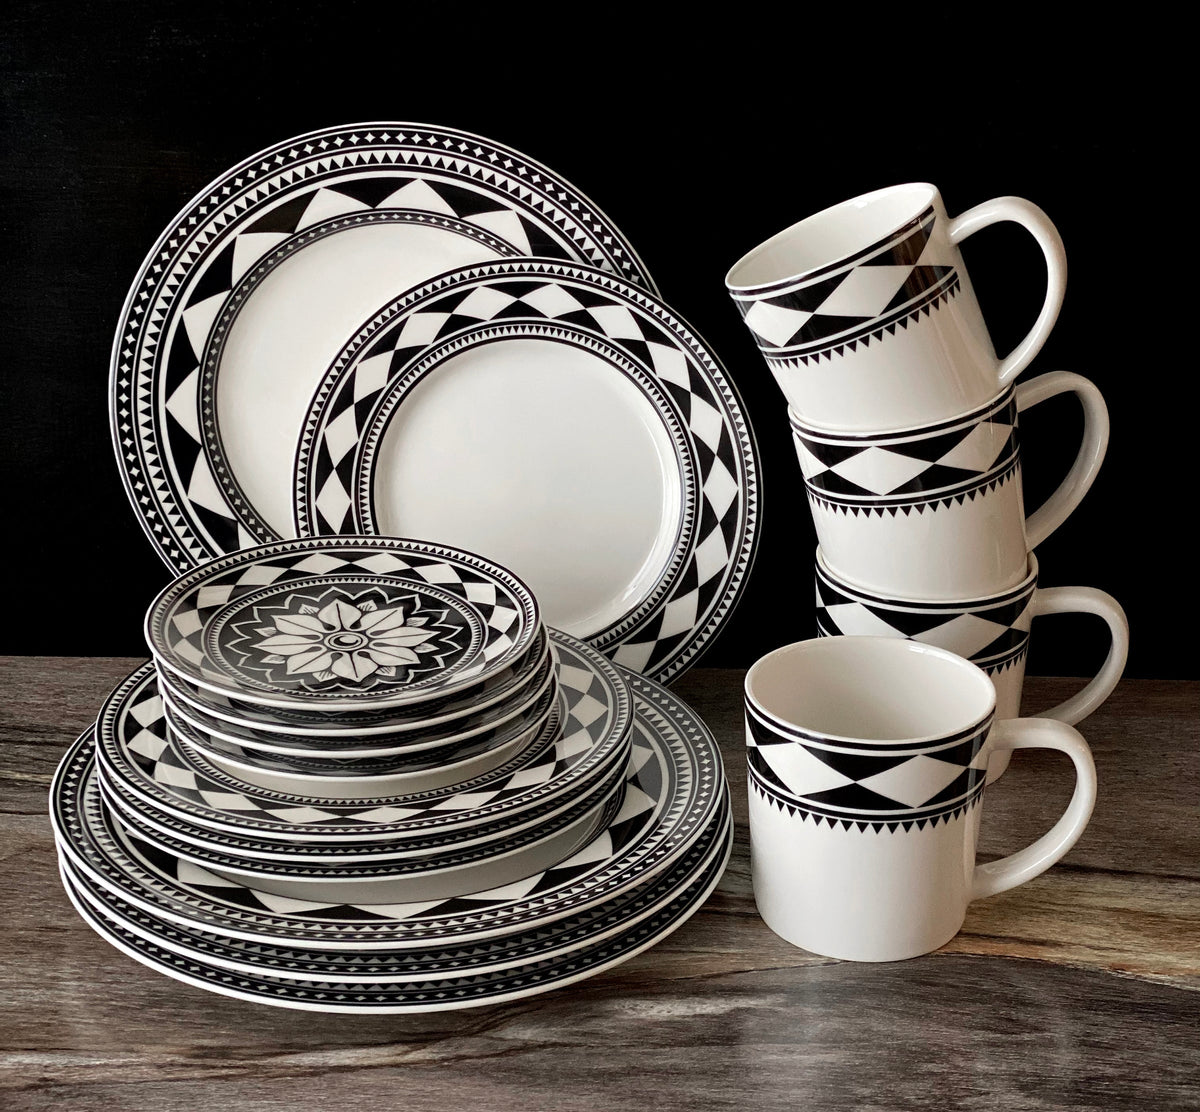 A set of Fez Mug Black dinnerware by Caskata Artisanal Home on a table.